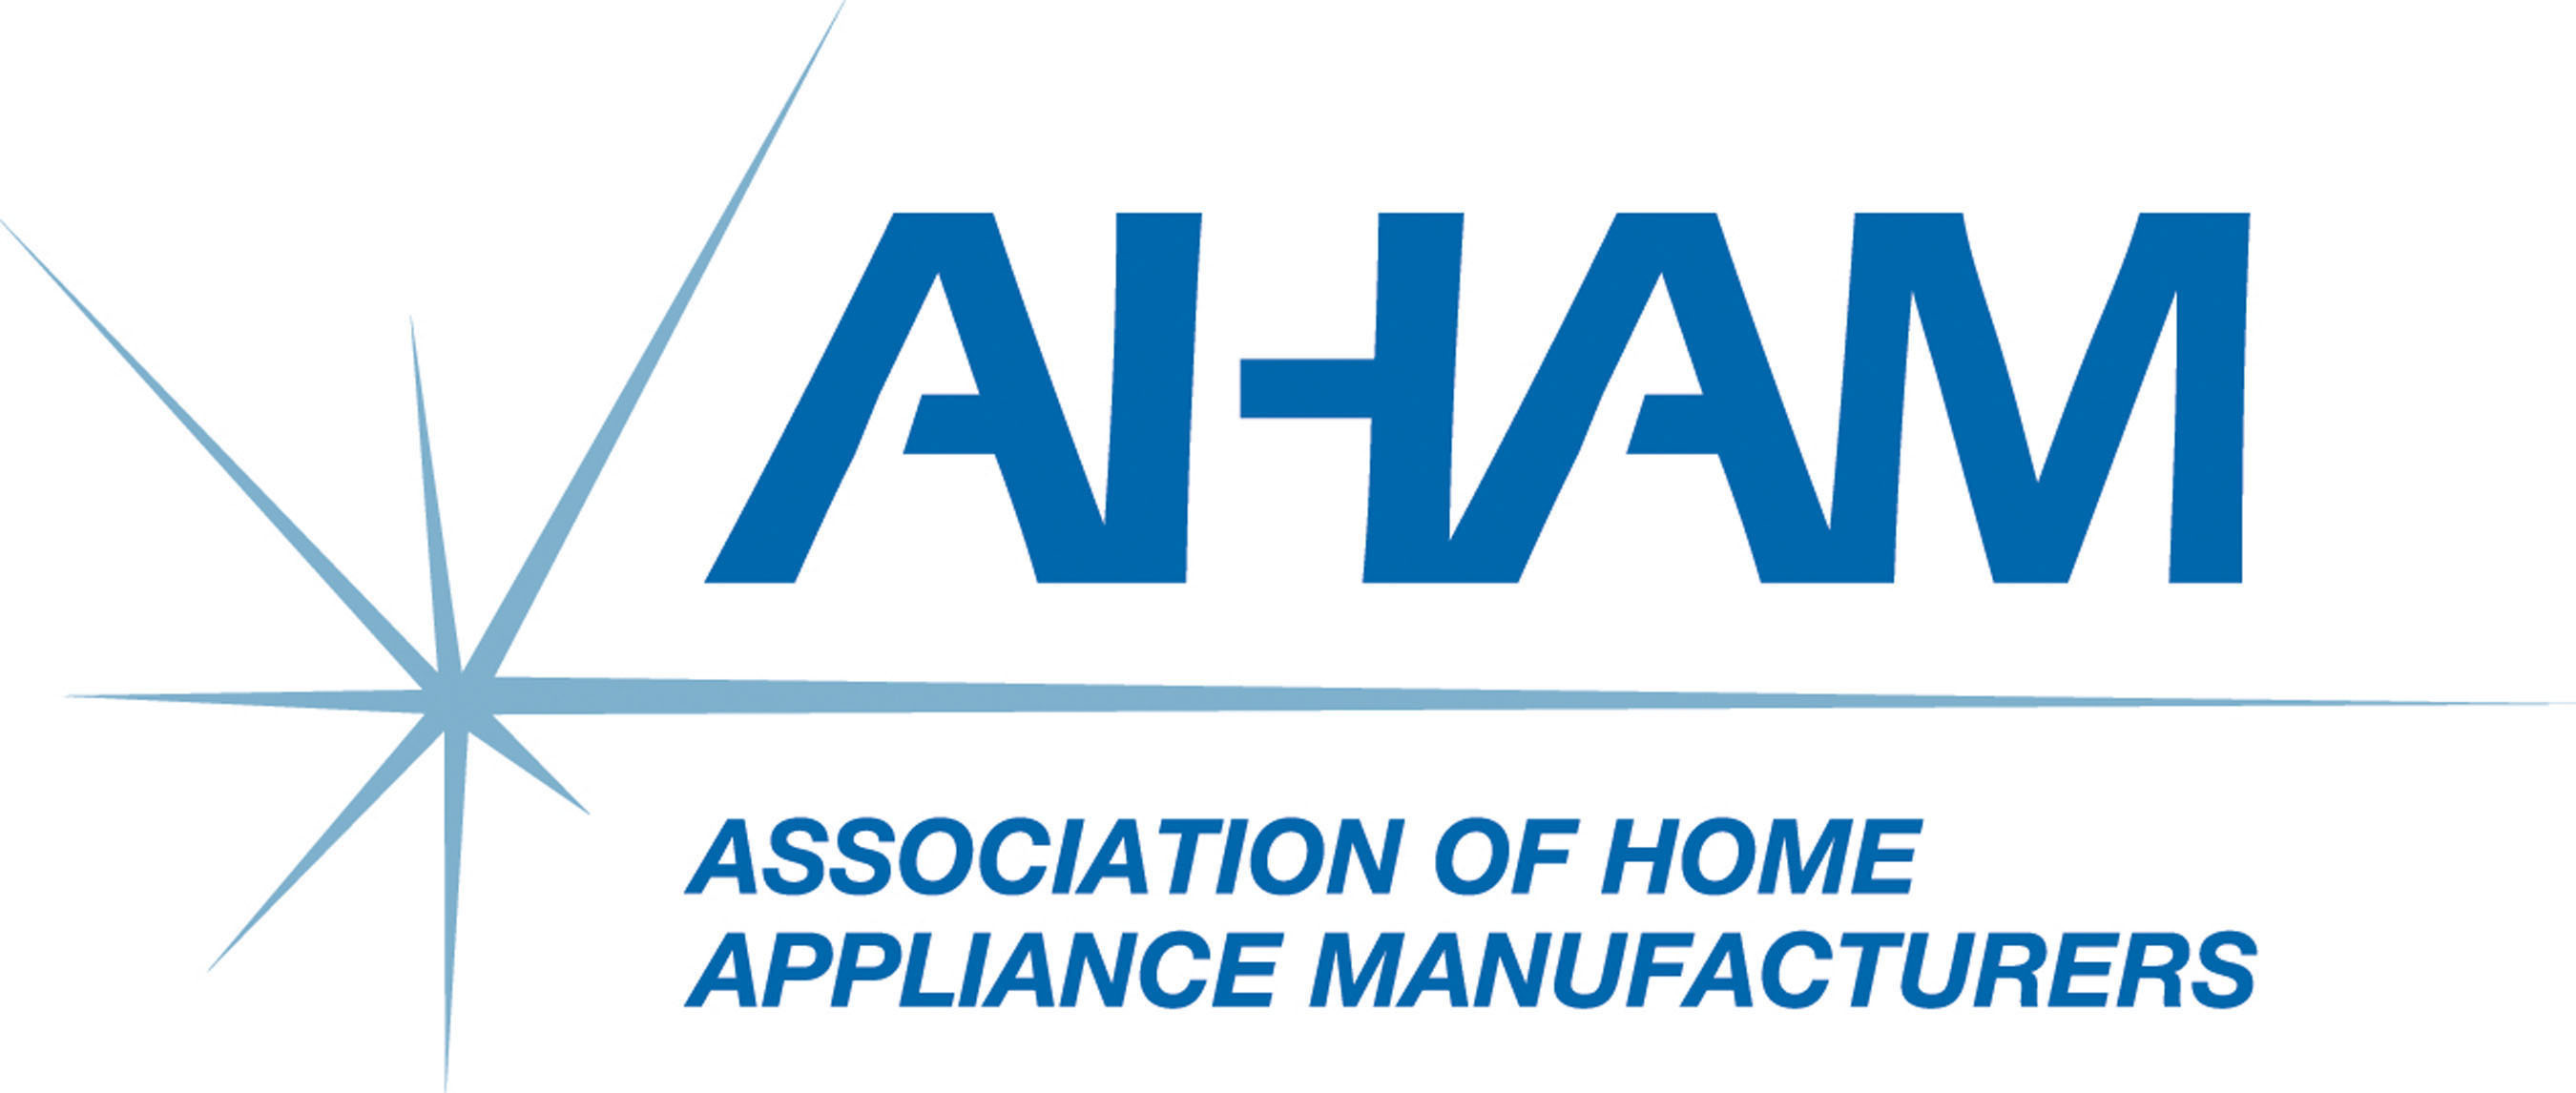 Association of Home Appliance Manufacturers. 1111 19th Street NW, Suite 402, Washington, DC 20036. (PRNewsFoto/Association of Home Appliance Manufacturers) (PRNewsFoto/)